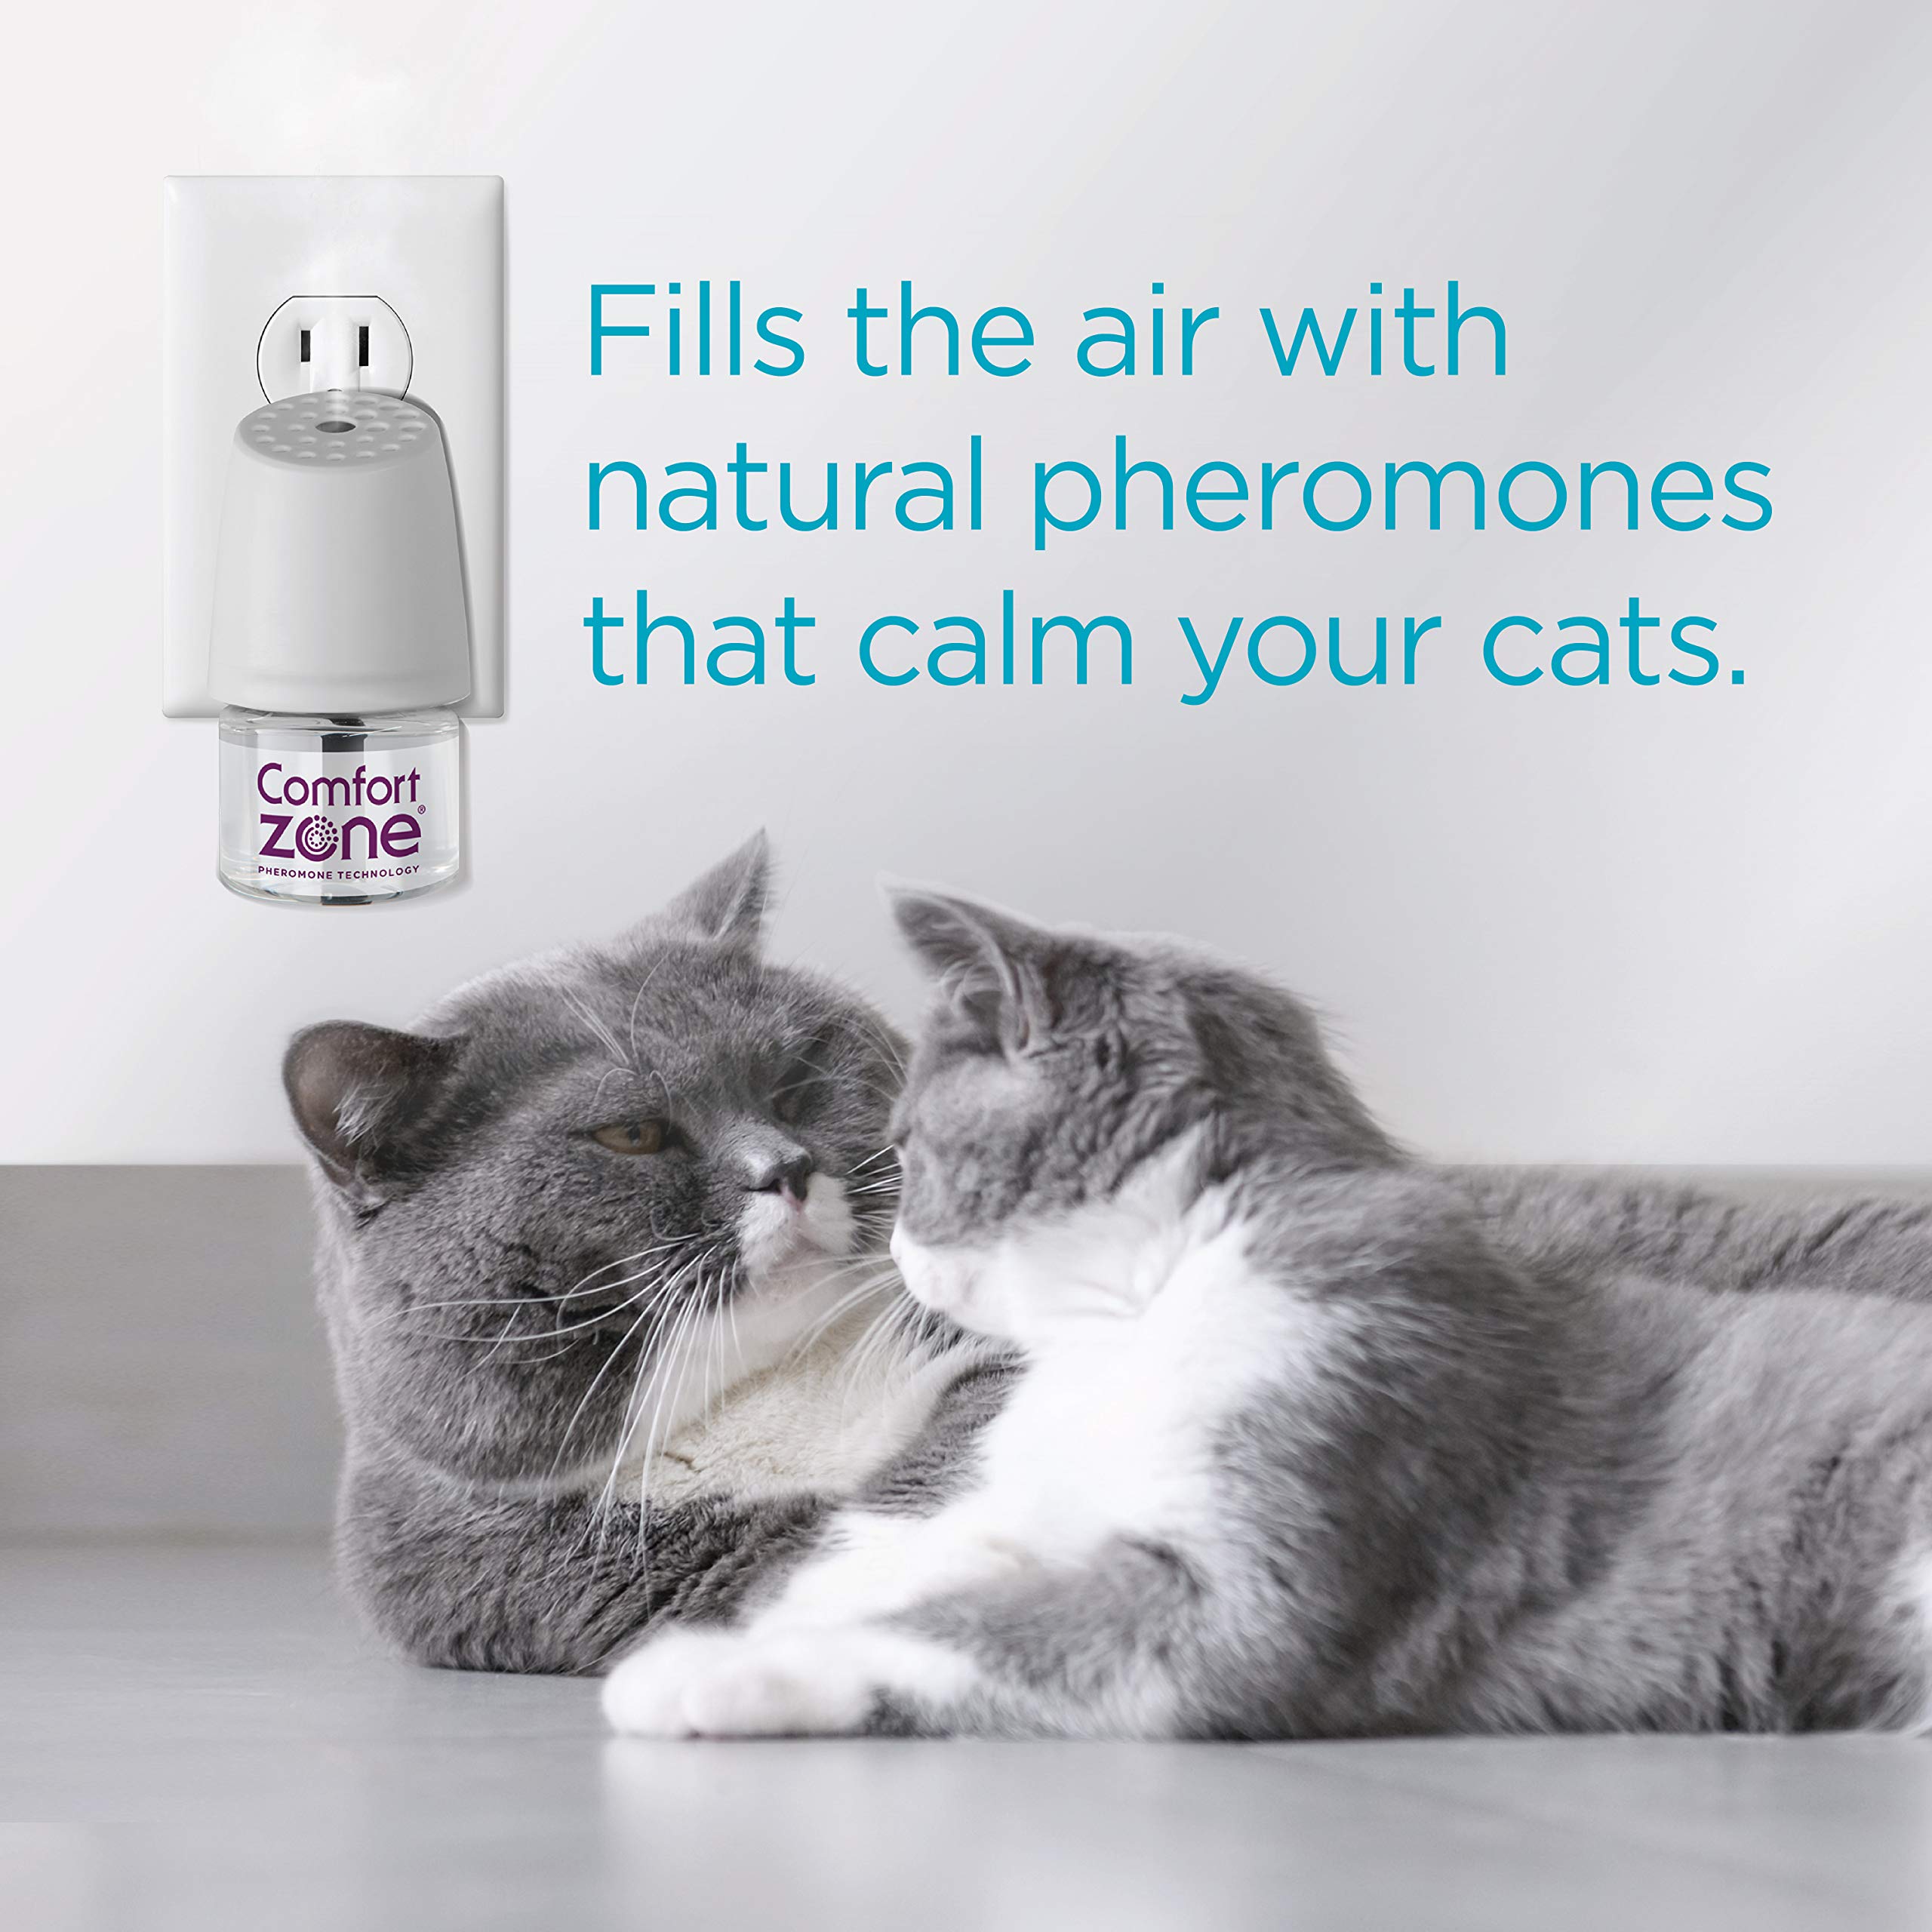 Comfort Zone MultiCat Calming Diffuser Kit, Cat Pheromone Spray, Single